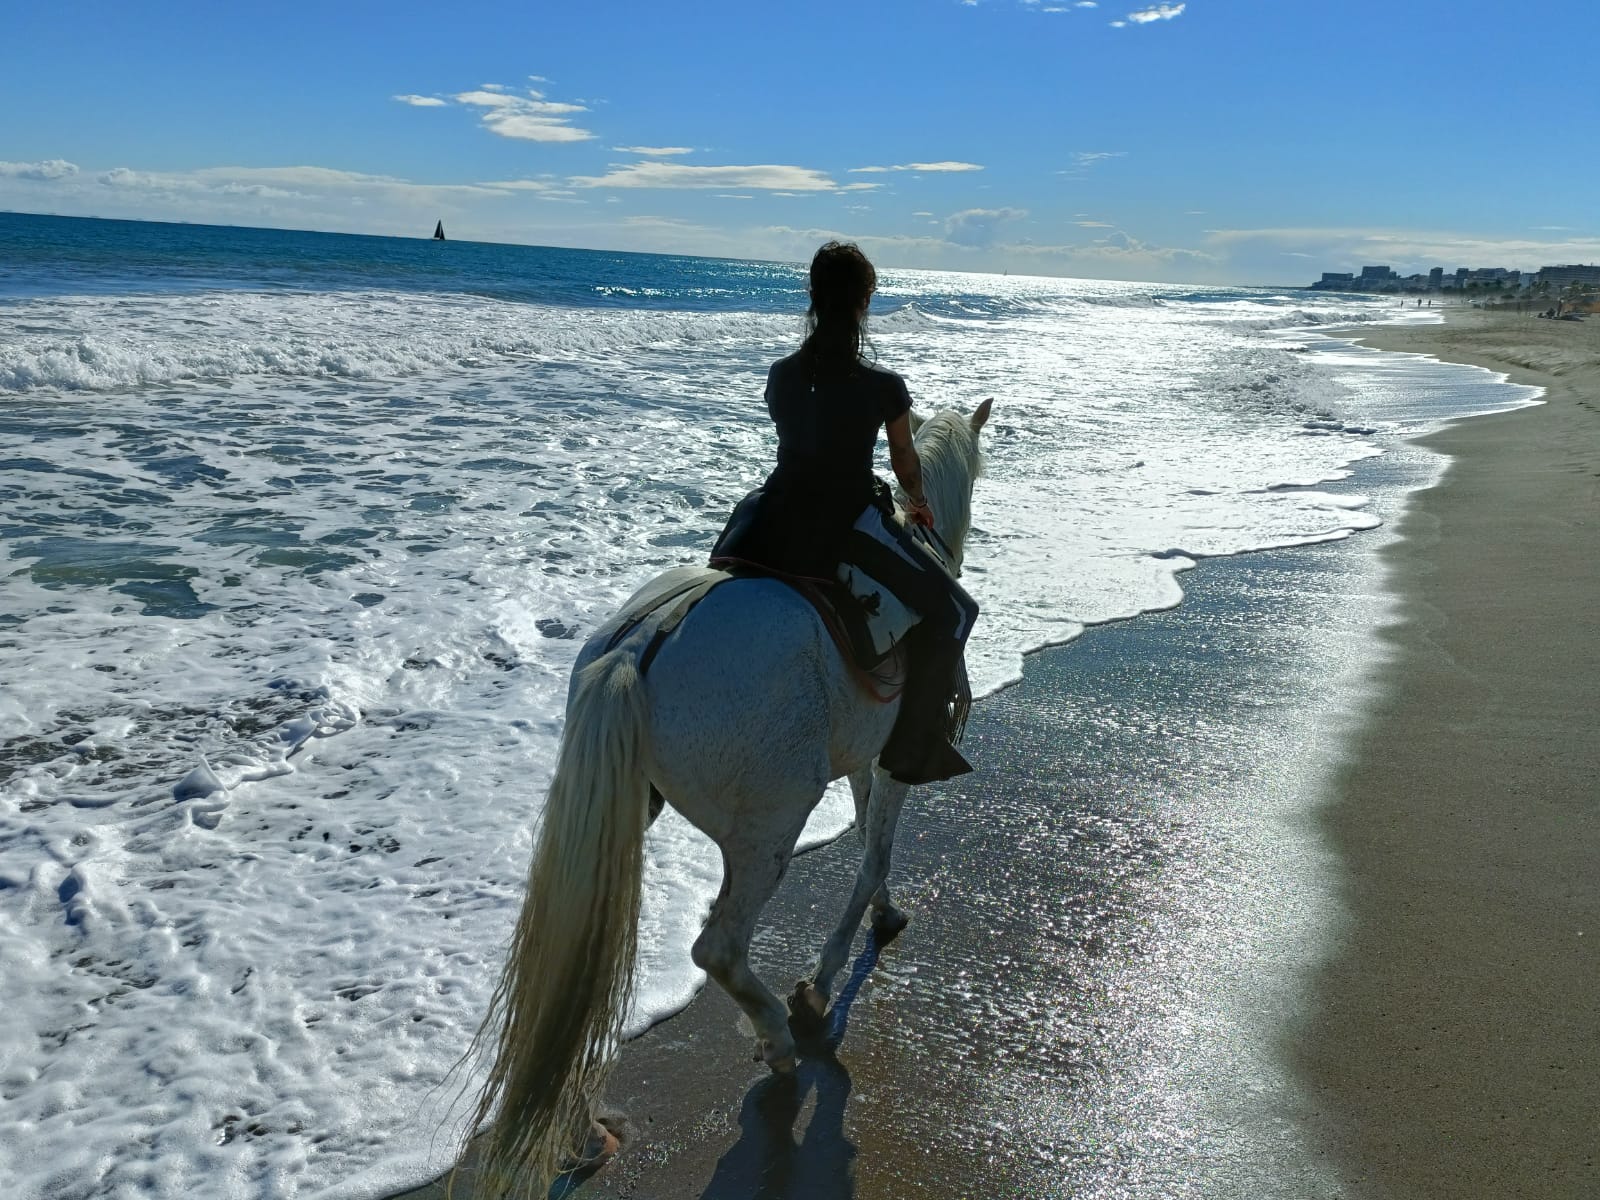 horse ride on the beach torremolinos malaga